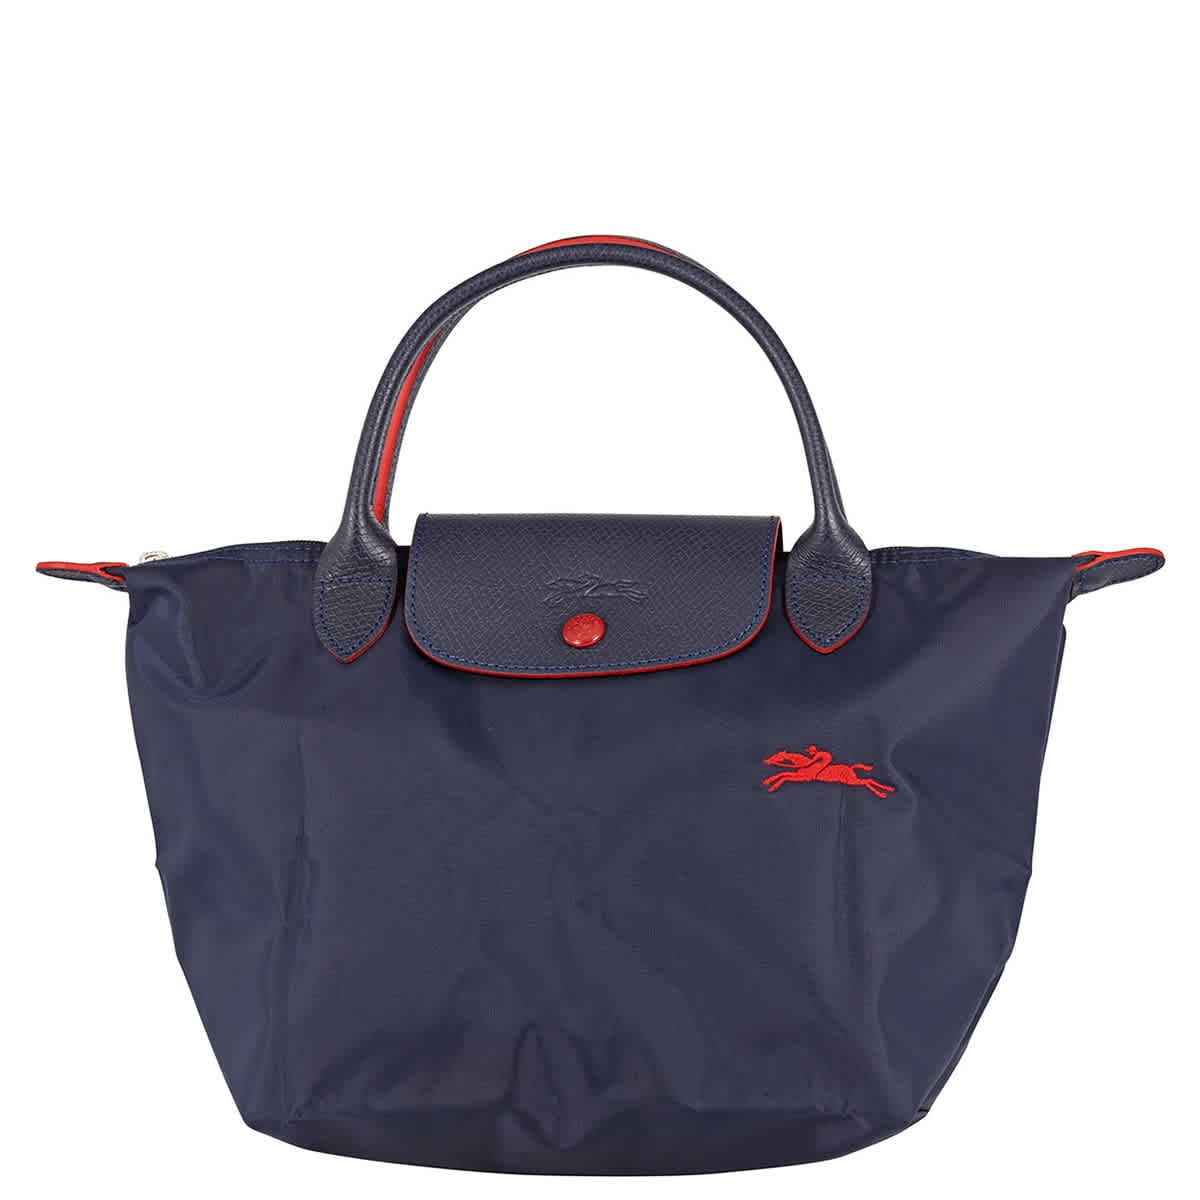 Longchamp Ladies Le Pliage Club Top Handle Bag S in Navy